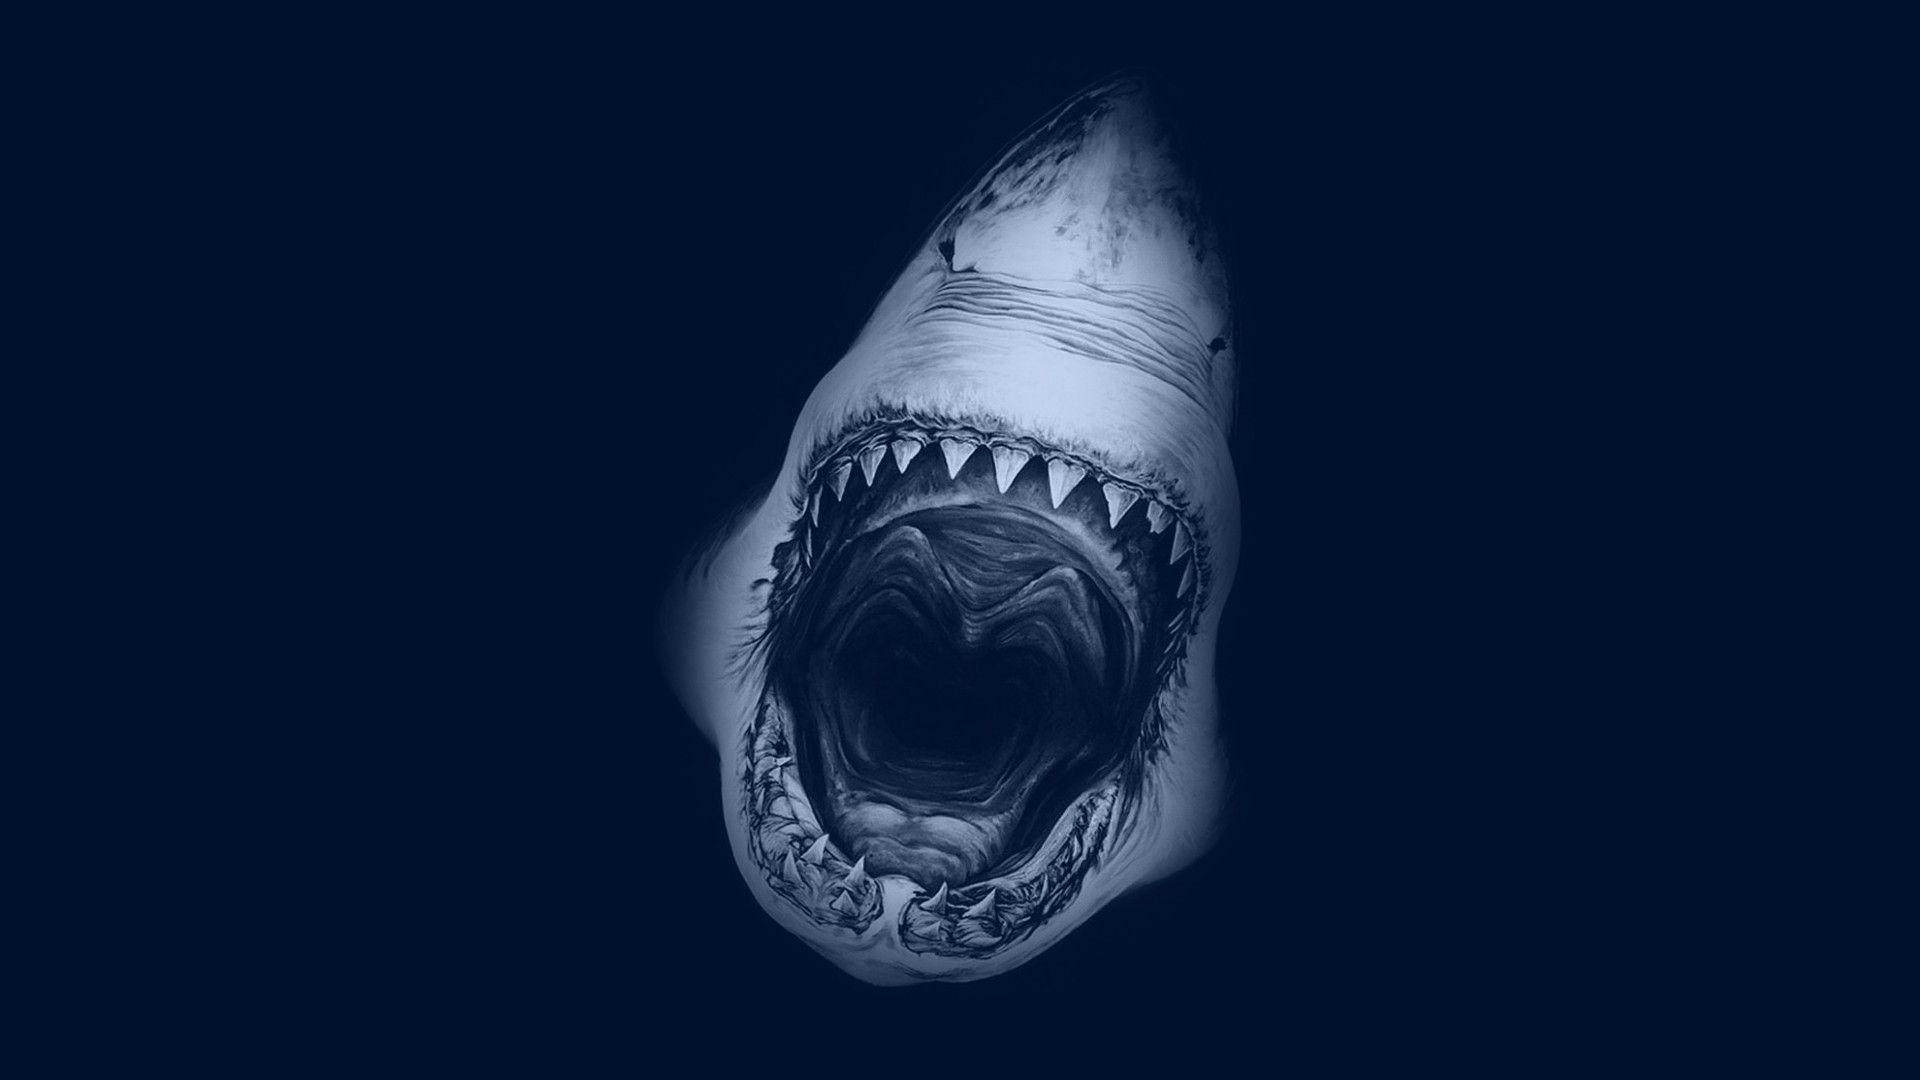 ocean white predator scary sharks teeth great sea 1920x1080 wallpaper High Quality Wallpaper, High Definition Wallpaper